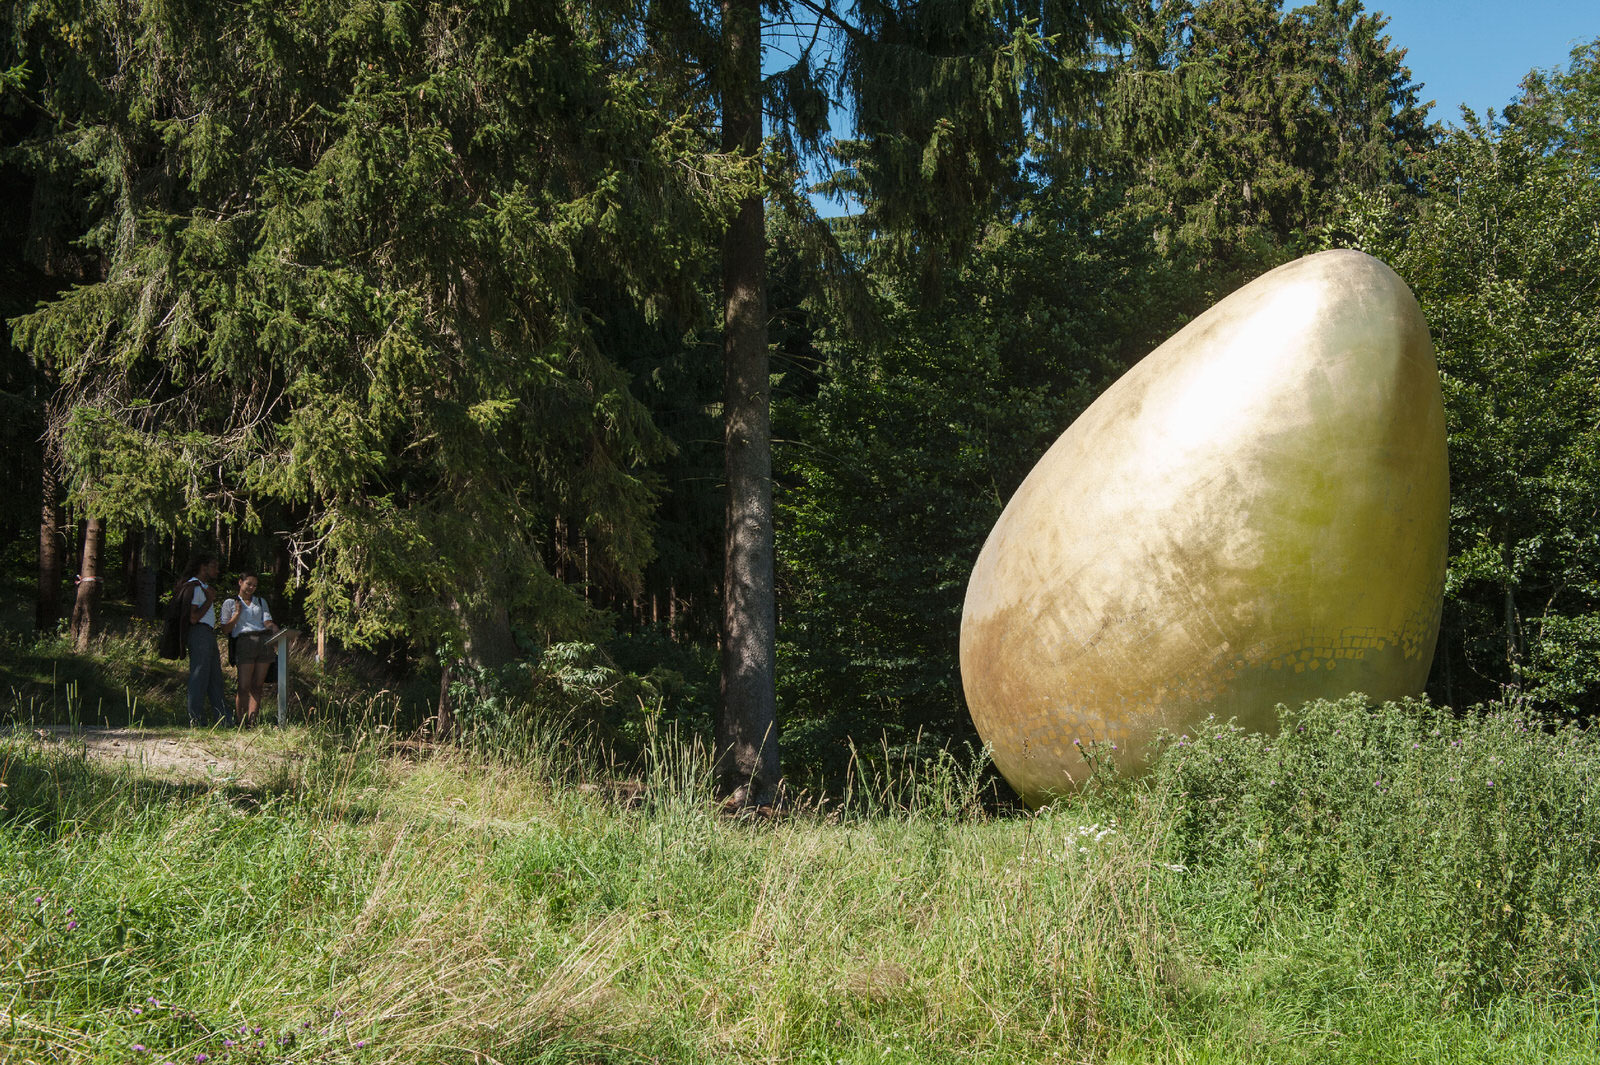 Sculpture Golden Egg at the Forest Sculpture Trail